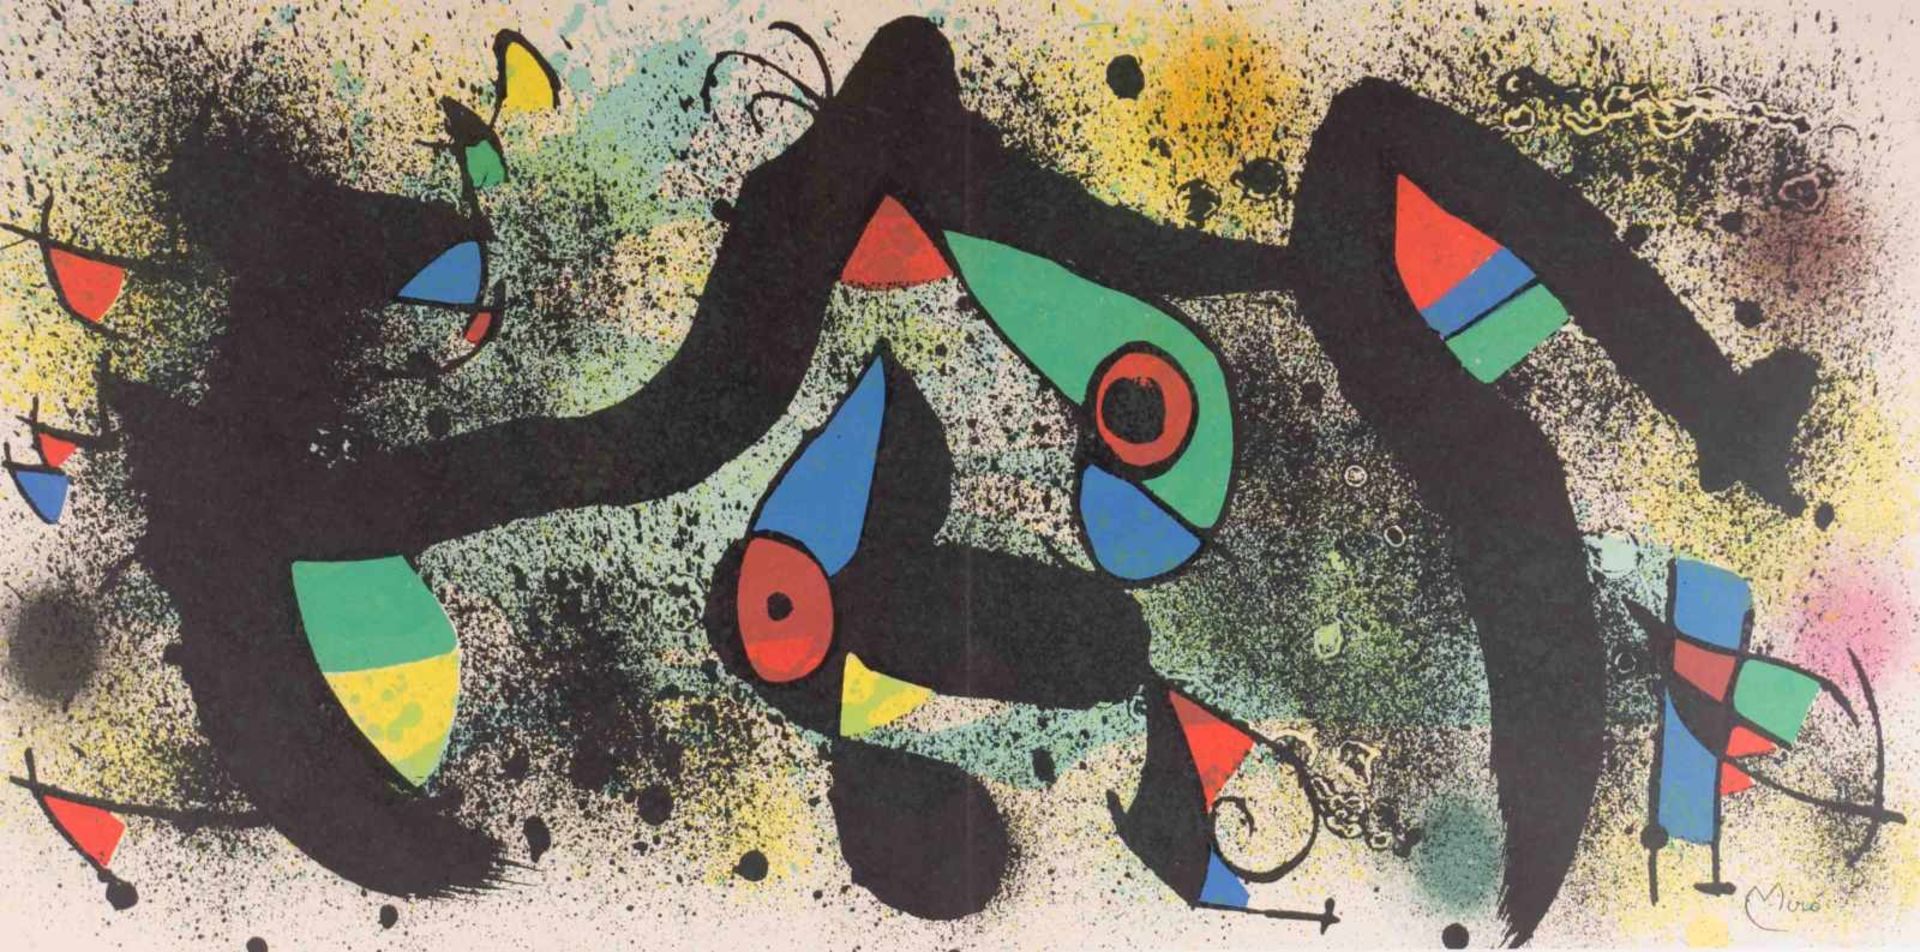 Joan MIRO (1893-1983)"ohne Titel"Grafik-Farblithografie, 27,9 cm x 56,3 cm,im Stein signiertJoan